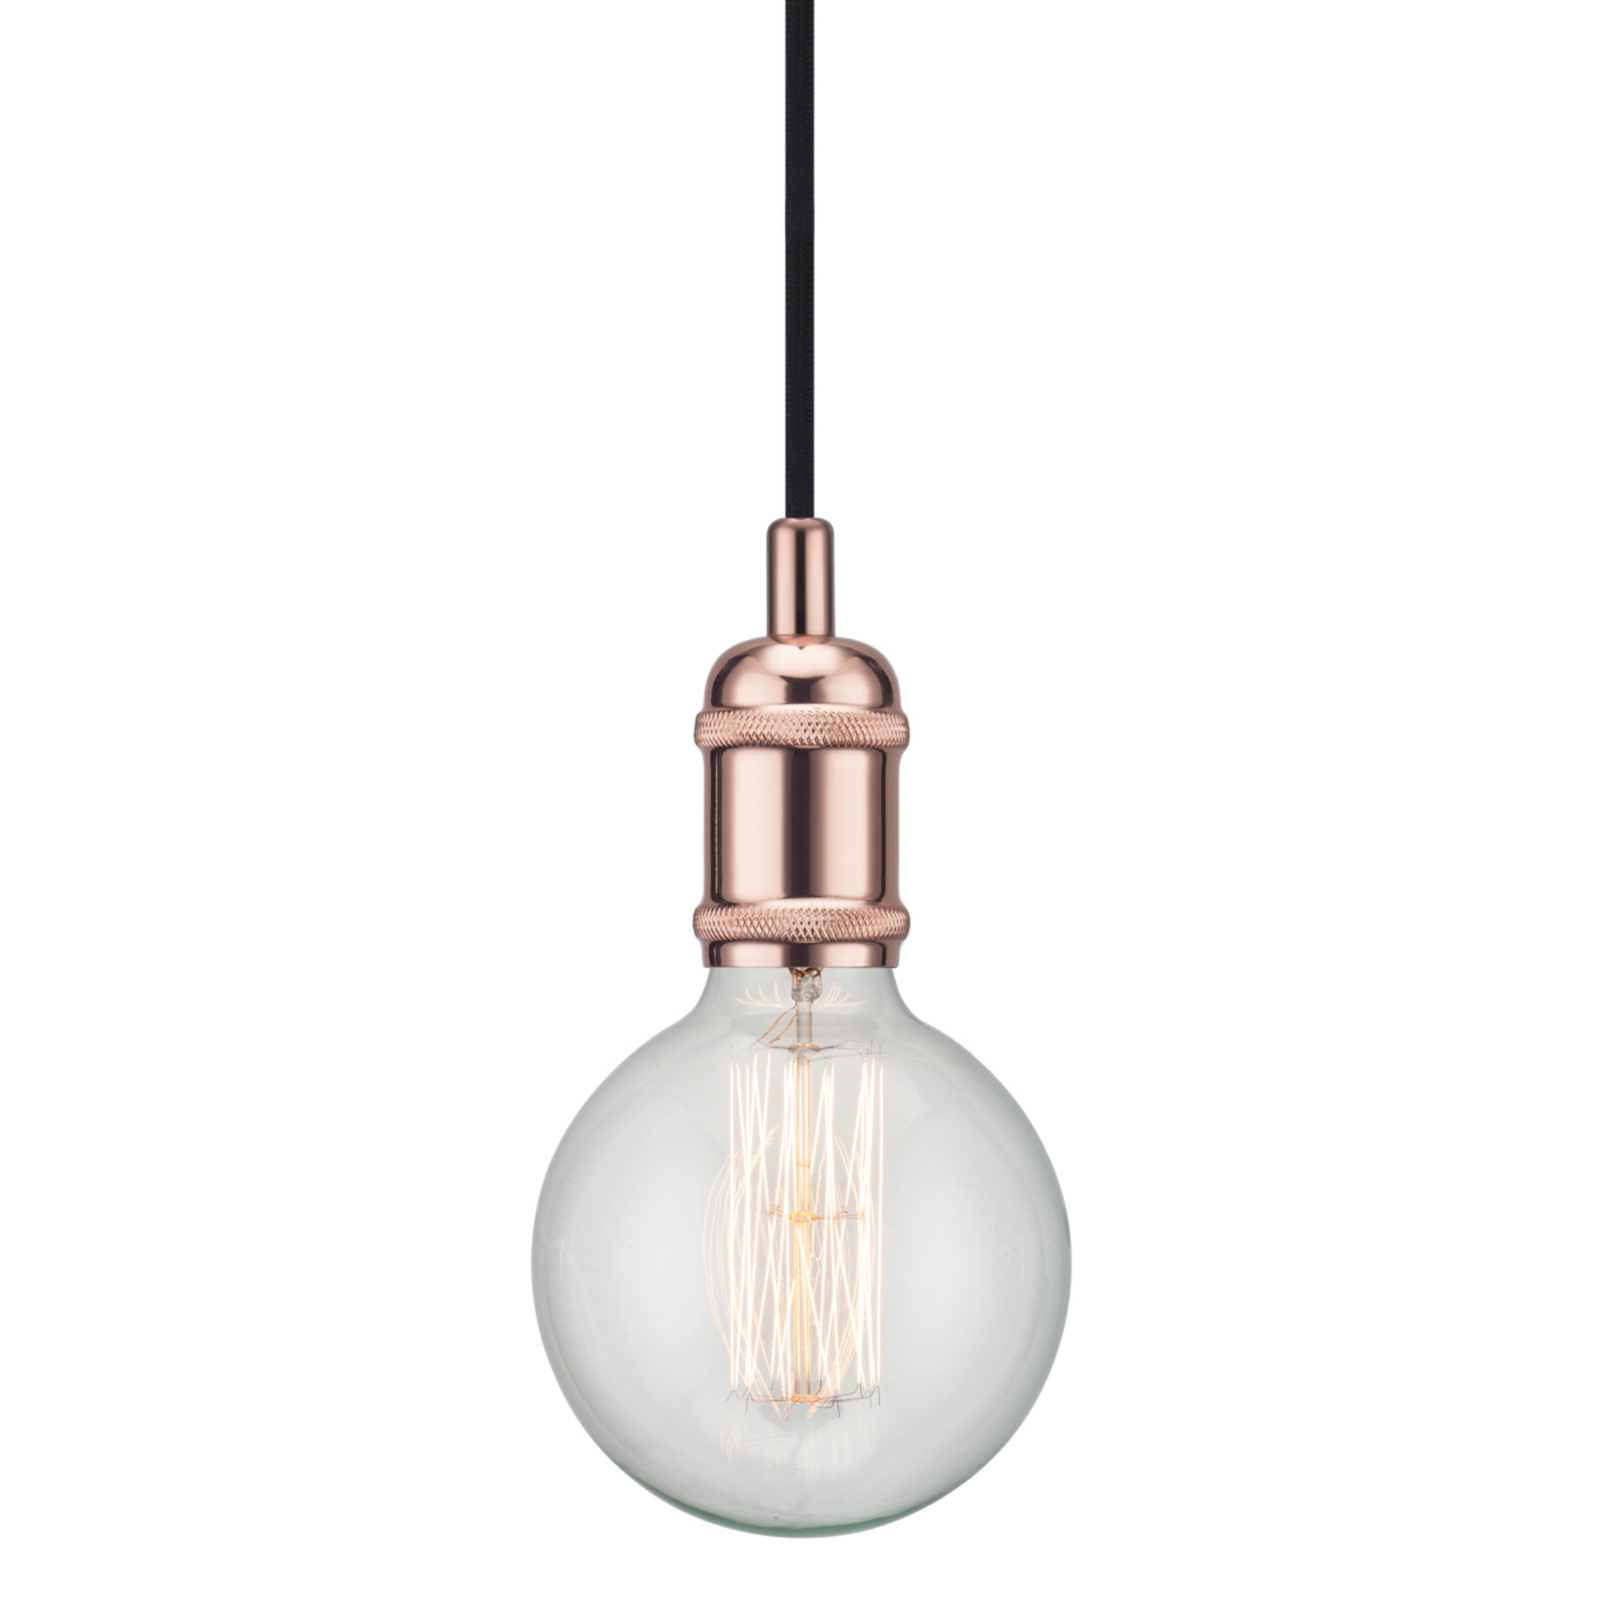 Avra – minimalist hanging lamp in copper